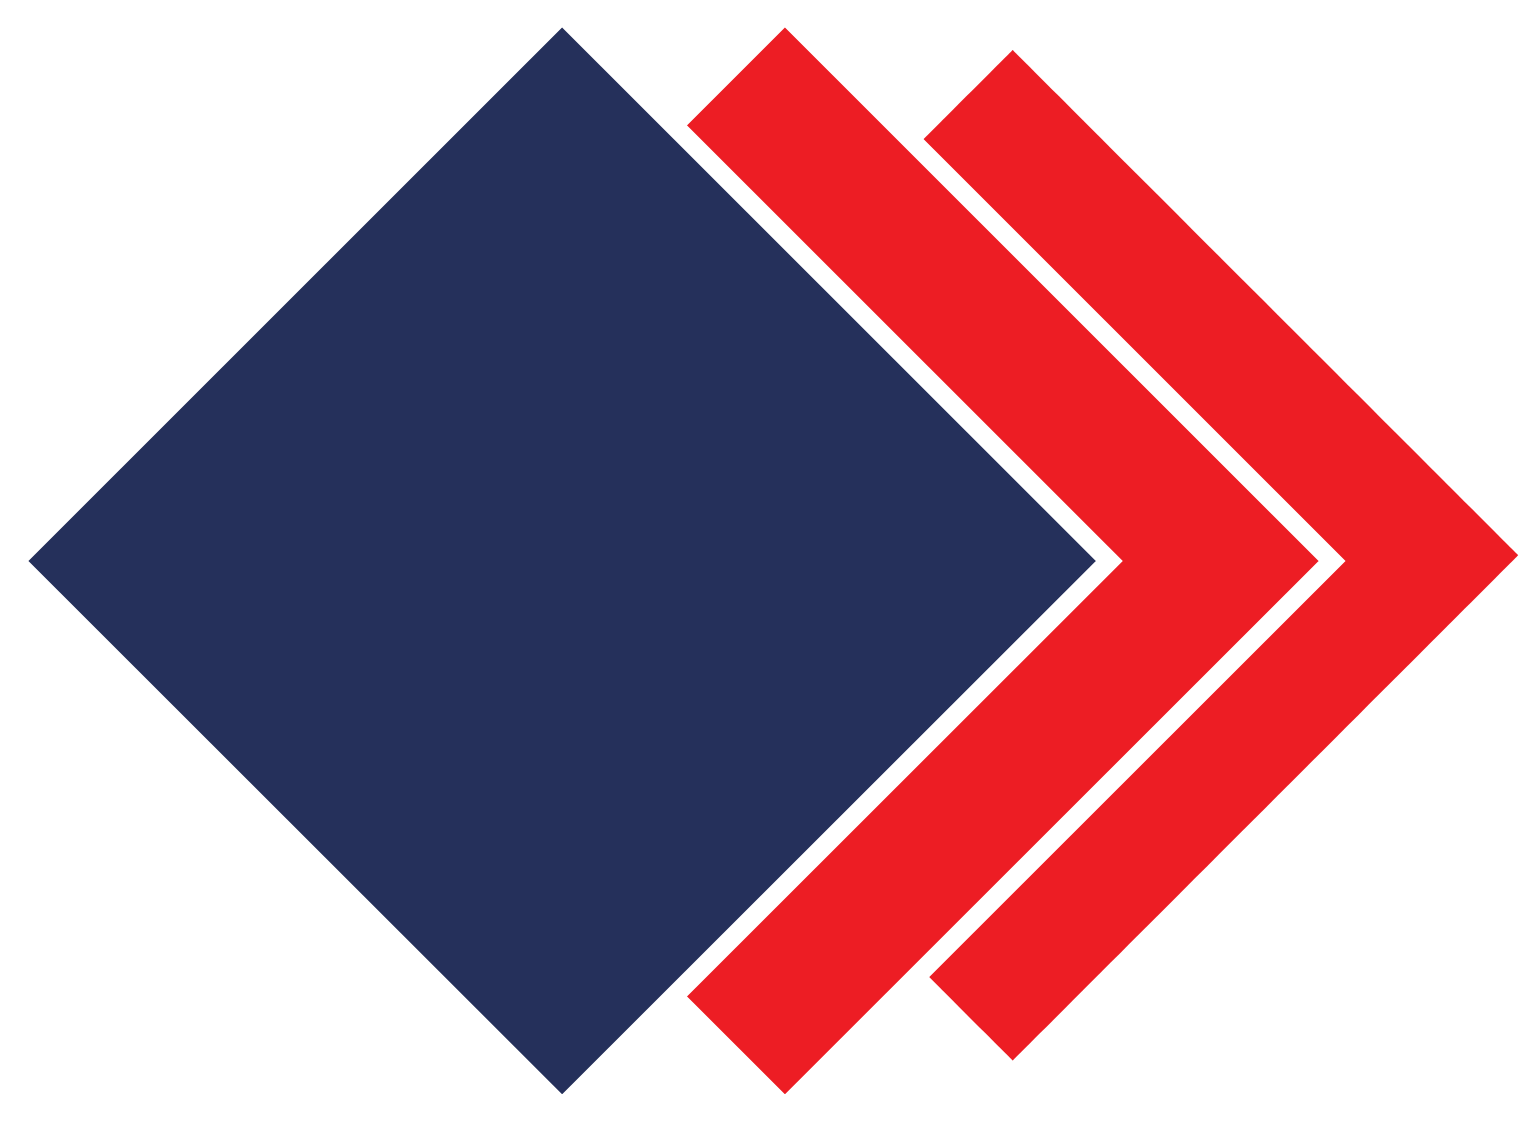 Cozi Logo